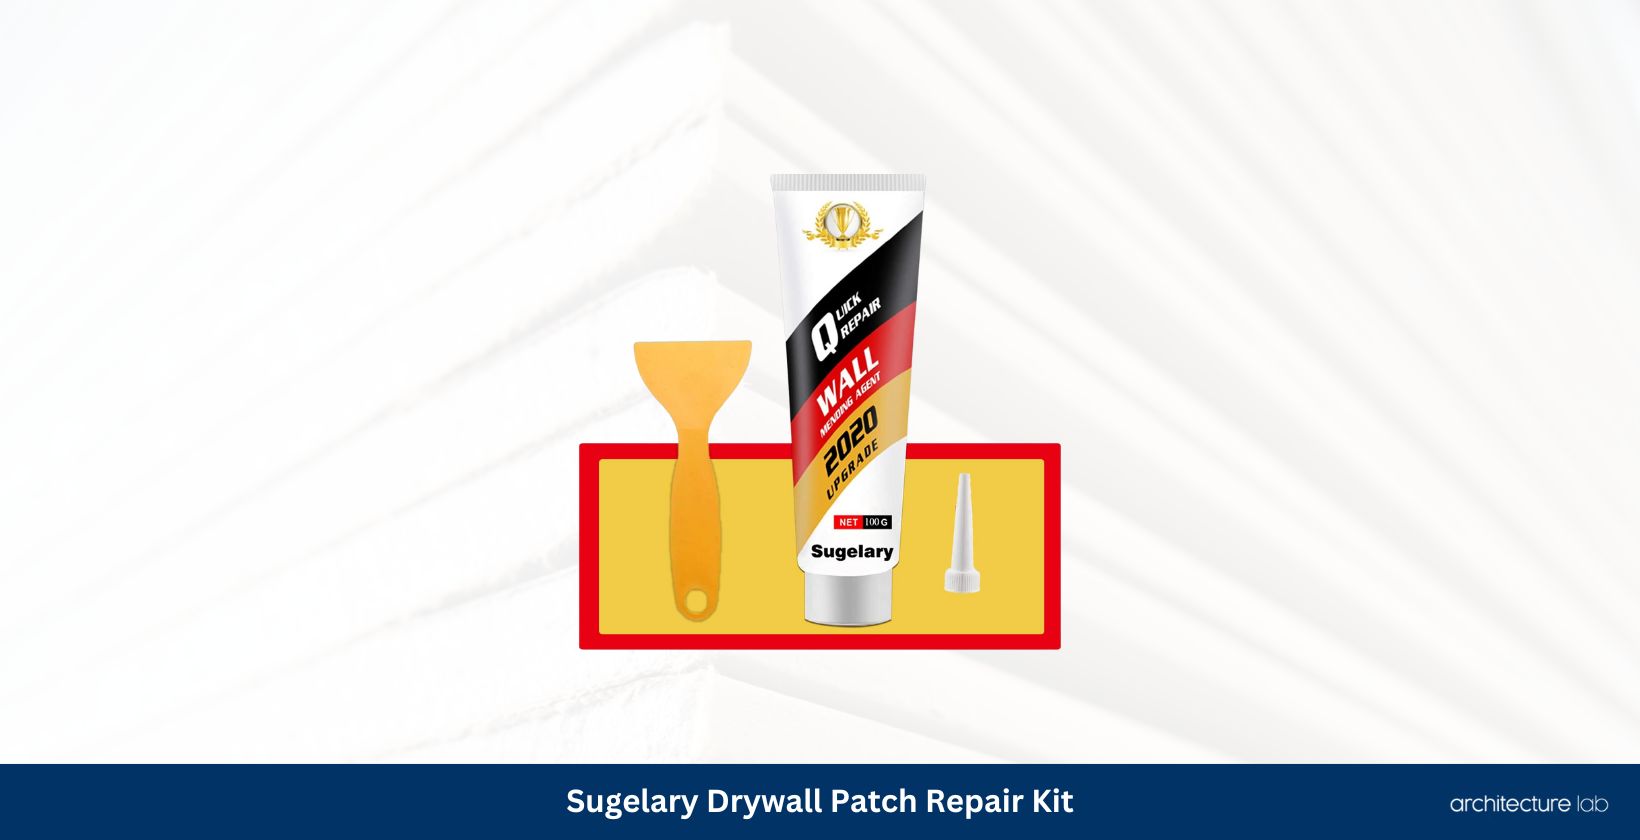 Sugelary drywall patch repair kit